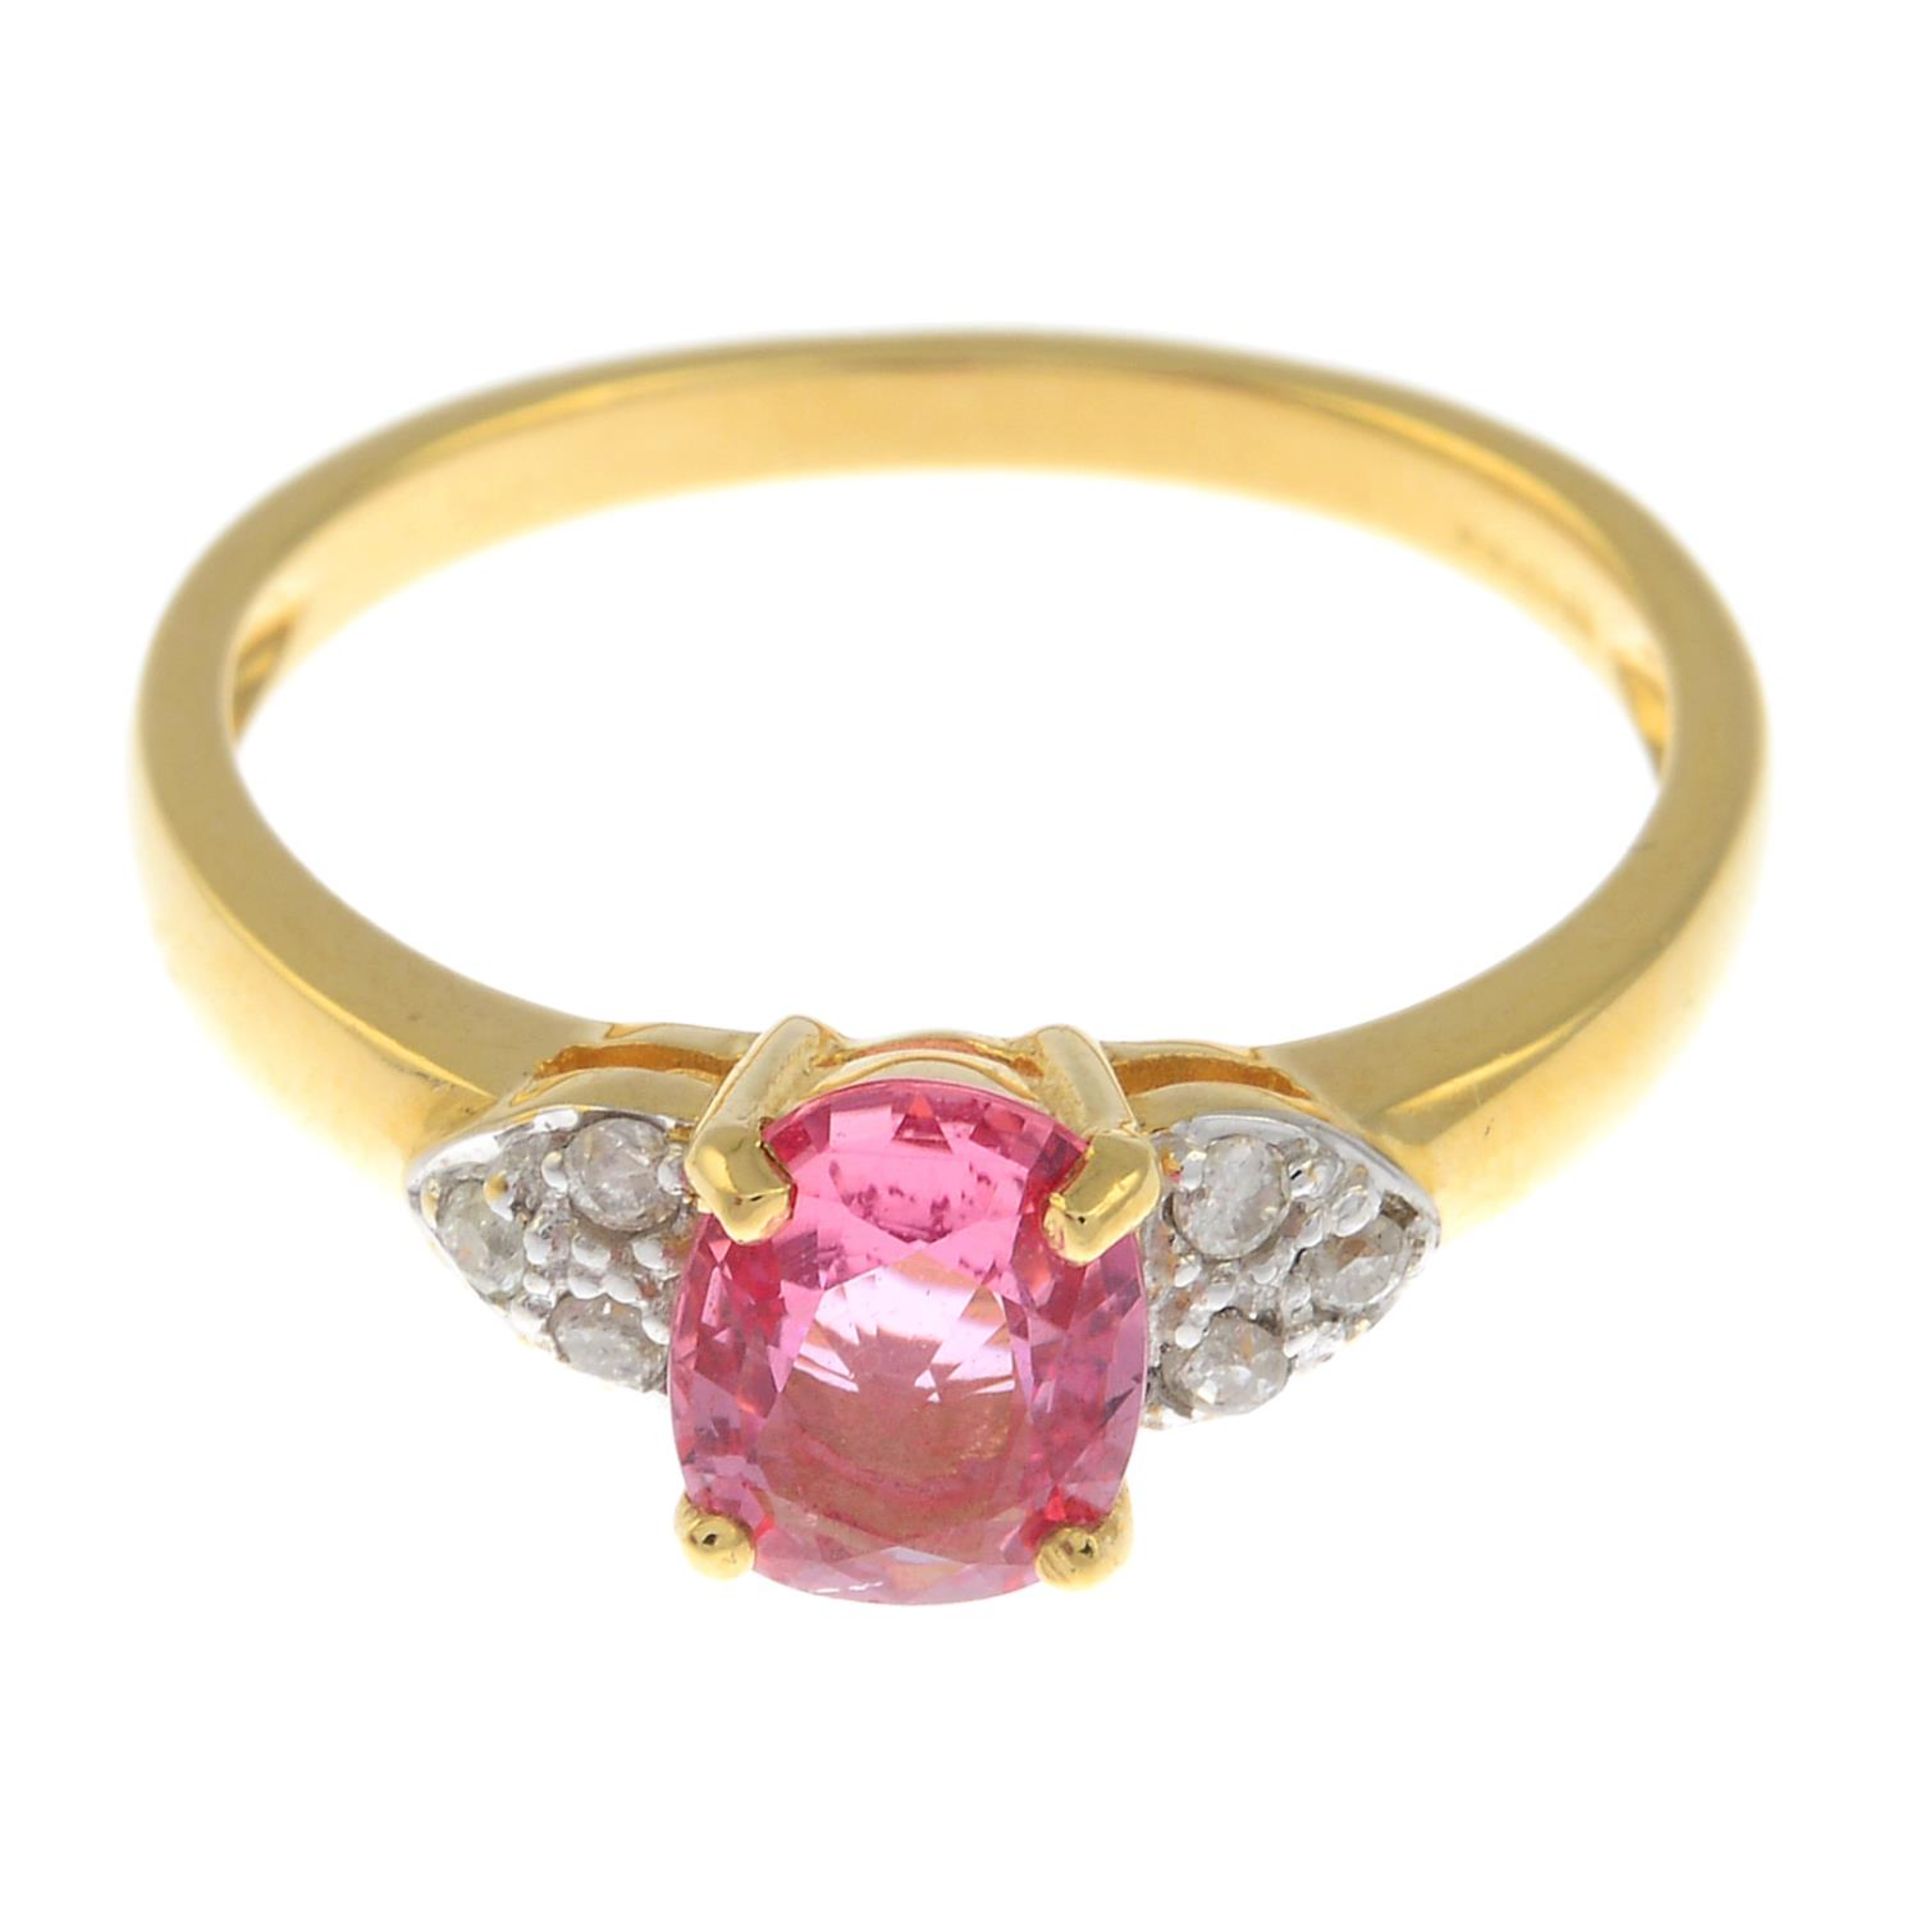 An 18ct gold orangish-pink sapphire and briliant-cut diamond dress ring.Sapphire weight